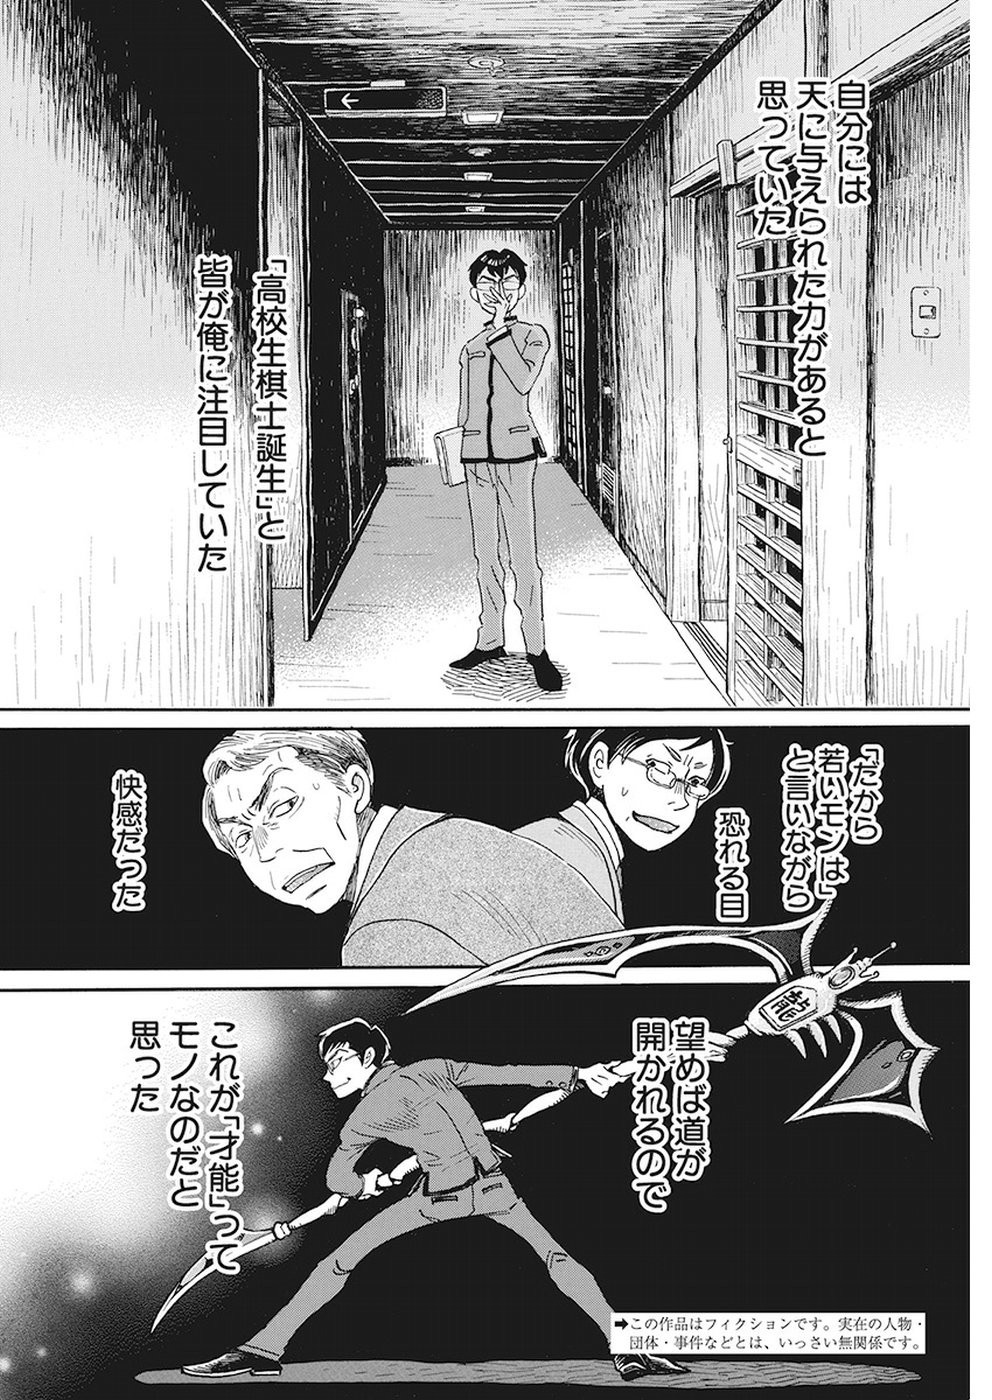 3 Gatsu no Lion - Chapter 157 - Page 2